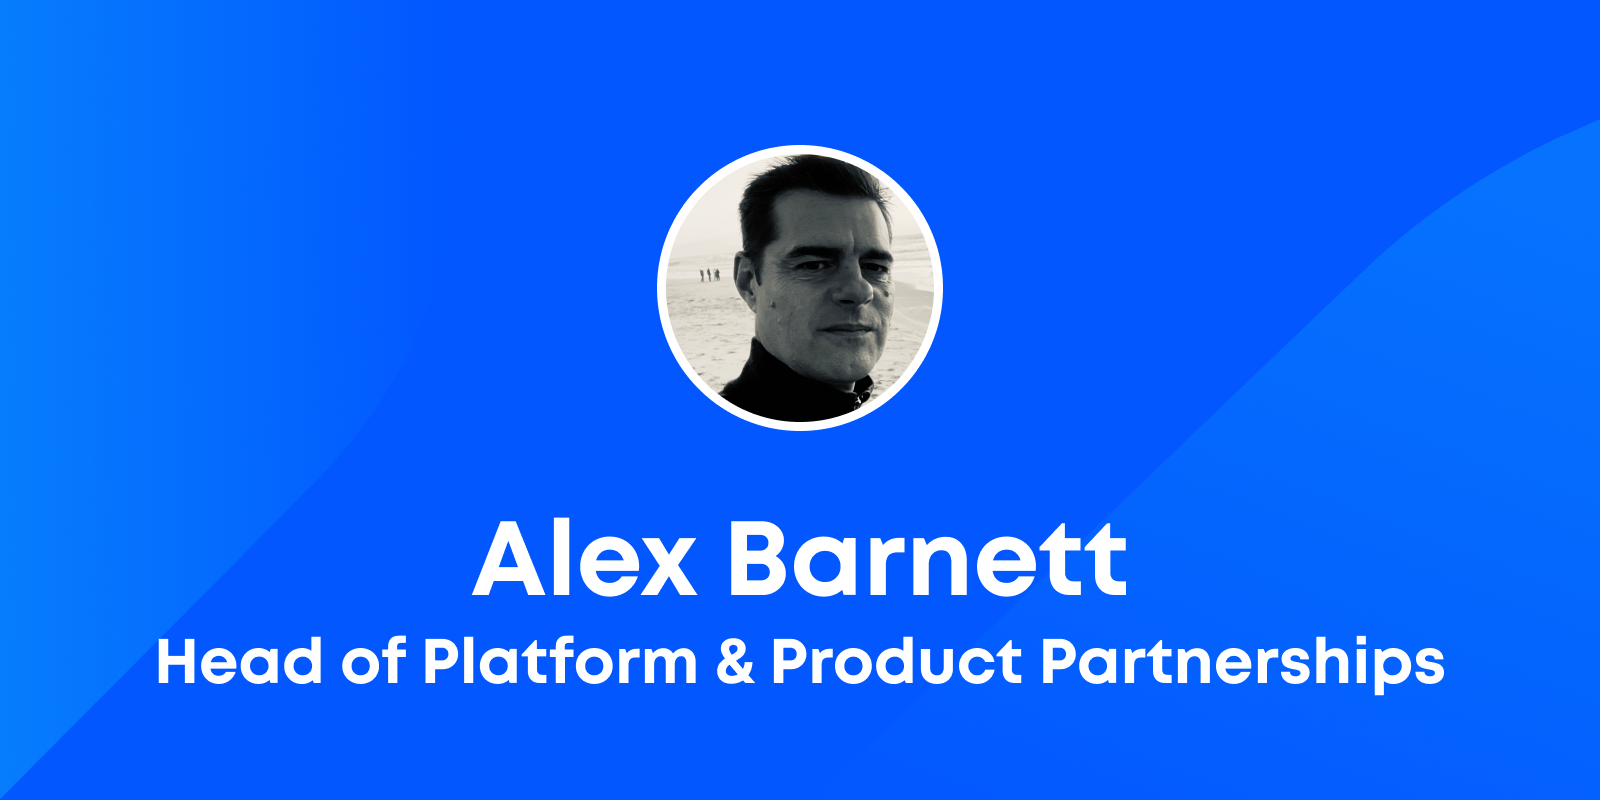 Introducing Alex Barnett, Head of Platform & Product Partnerships